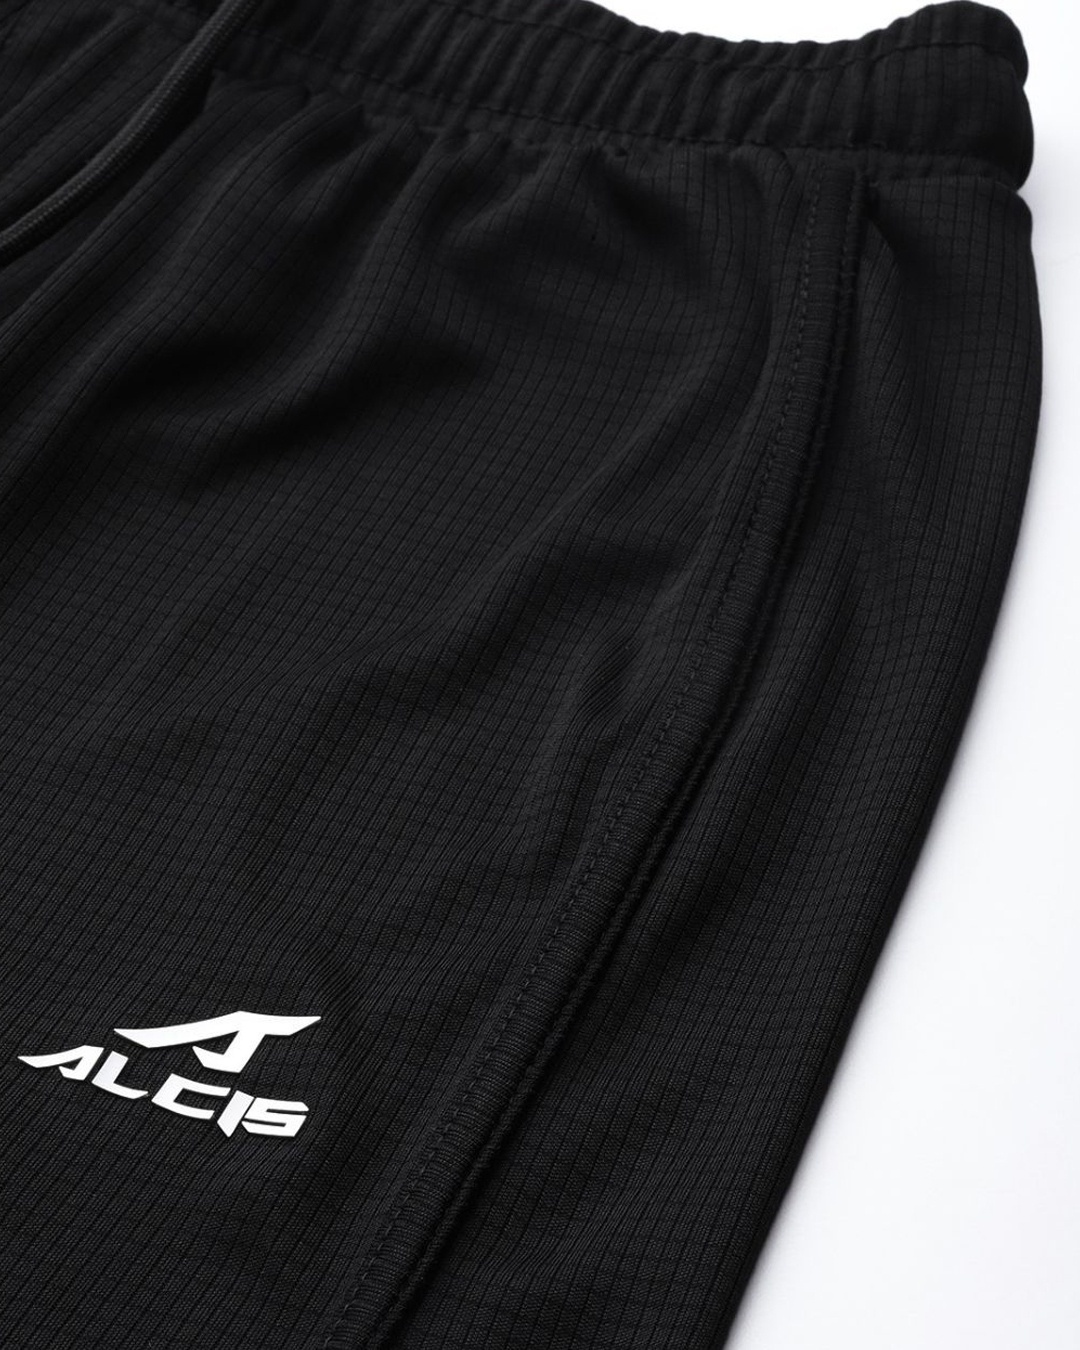 Shop Men's Black Solid Slim Fit Regular Training Shorts